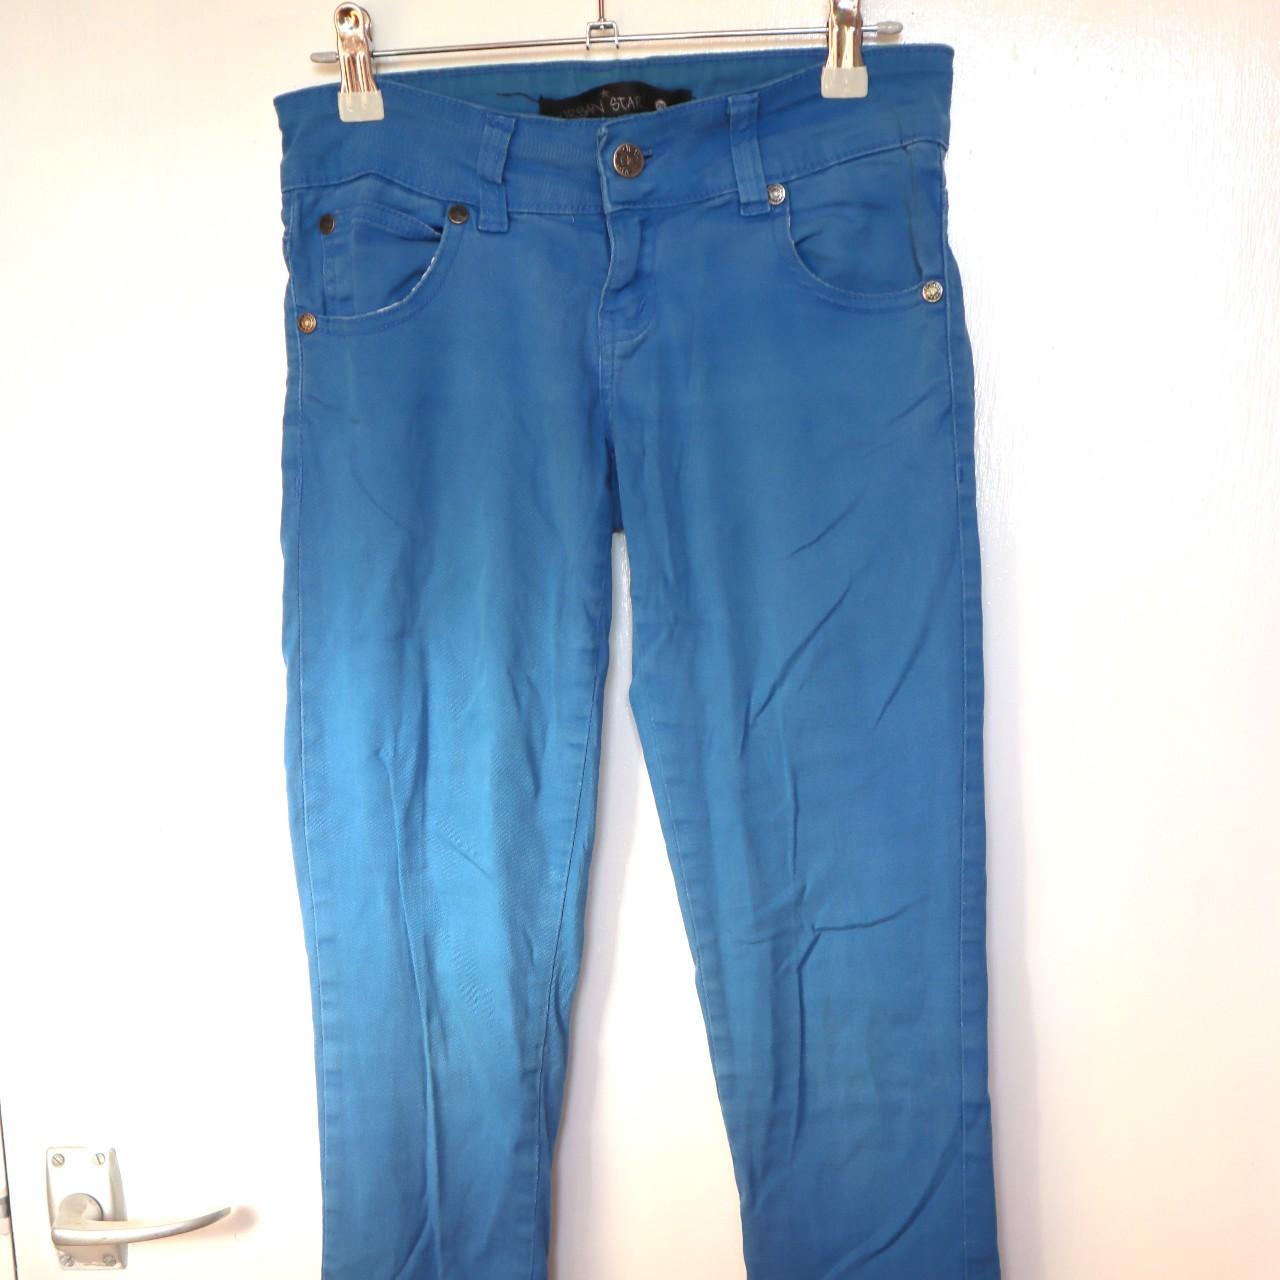 Bright blue scene kid style skinny jeans - Depop